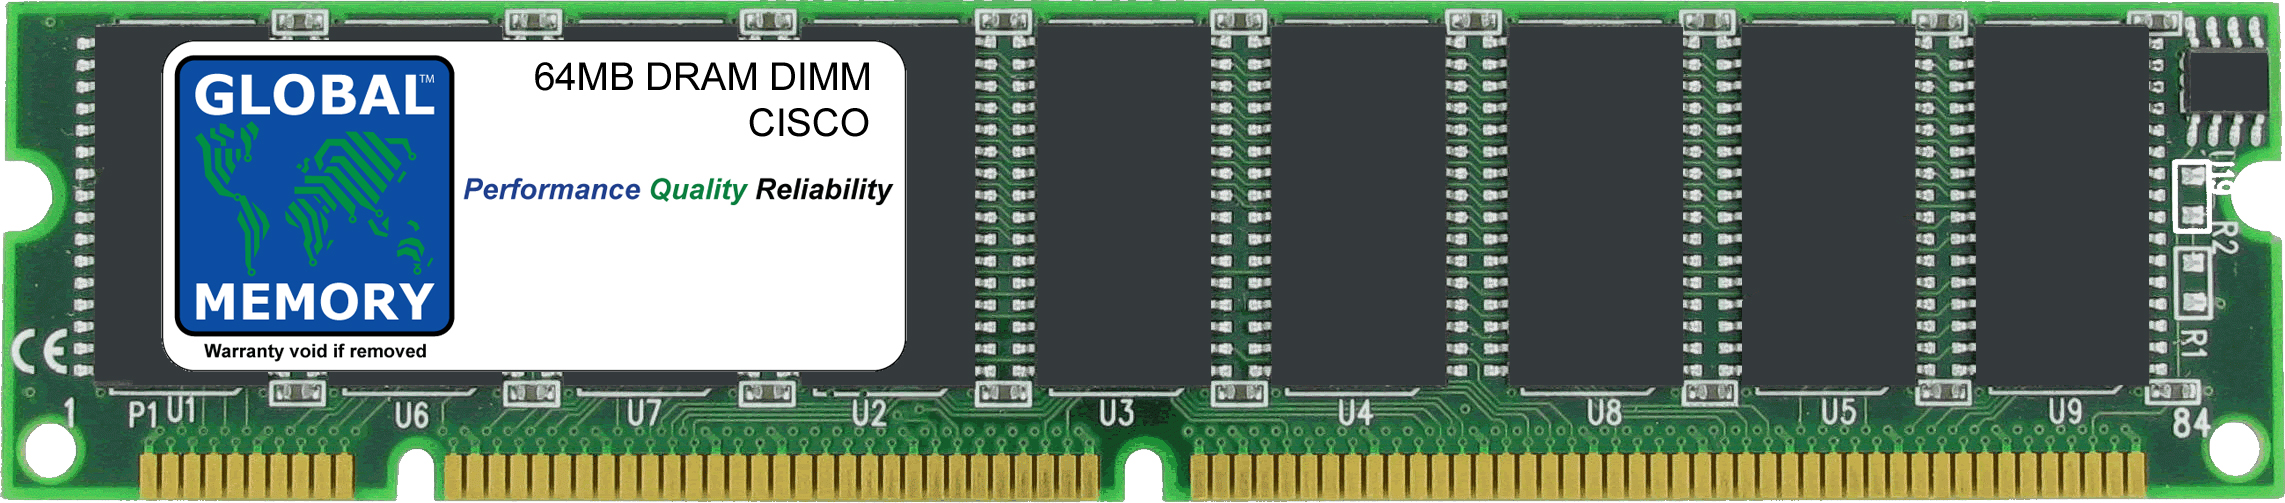 64MB DRAM DIMM MEMORY RAM FOR CISCO ICS 7750 ASI-81/160 , MRP200/300 & MRP3-8FXS/16FS (MEM-MRP-64D) - Click Image to Close